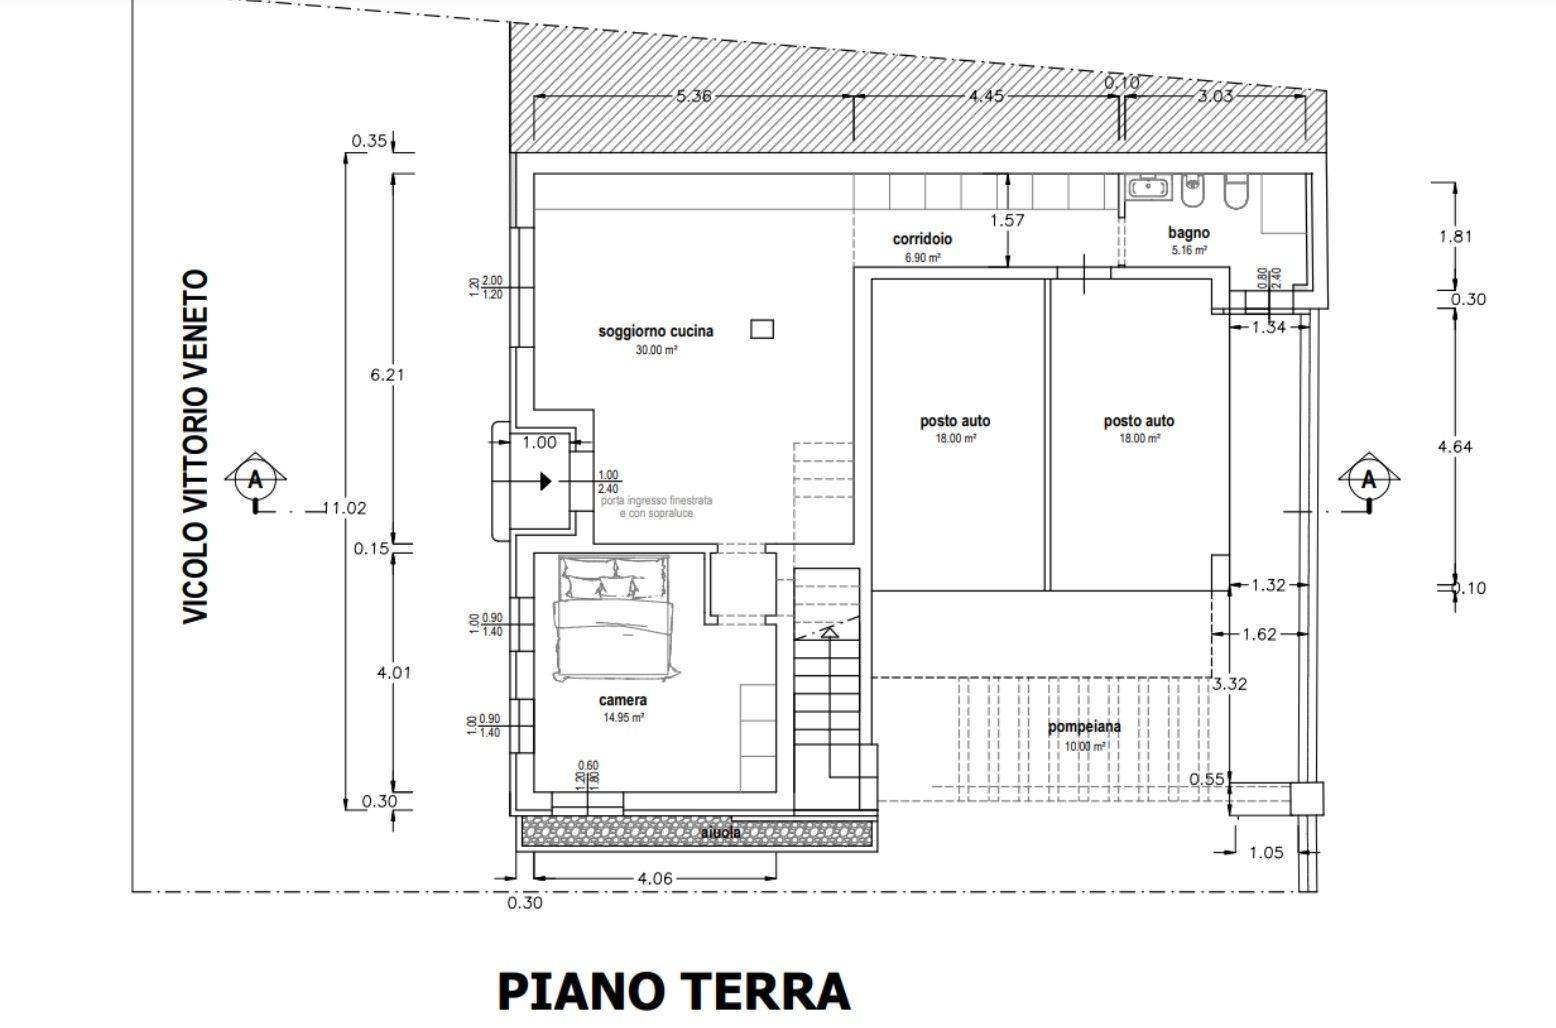 PIANO TERRA